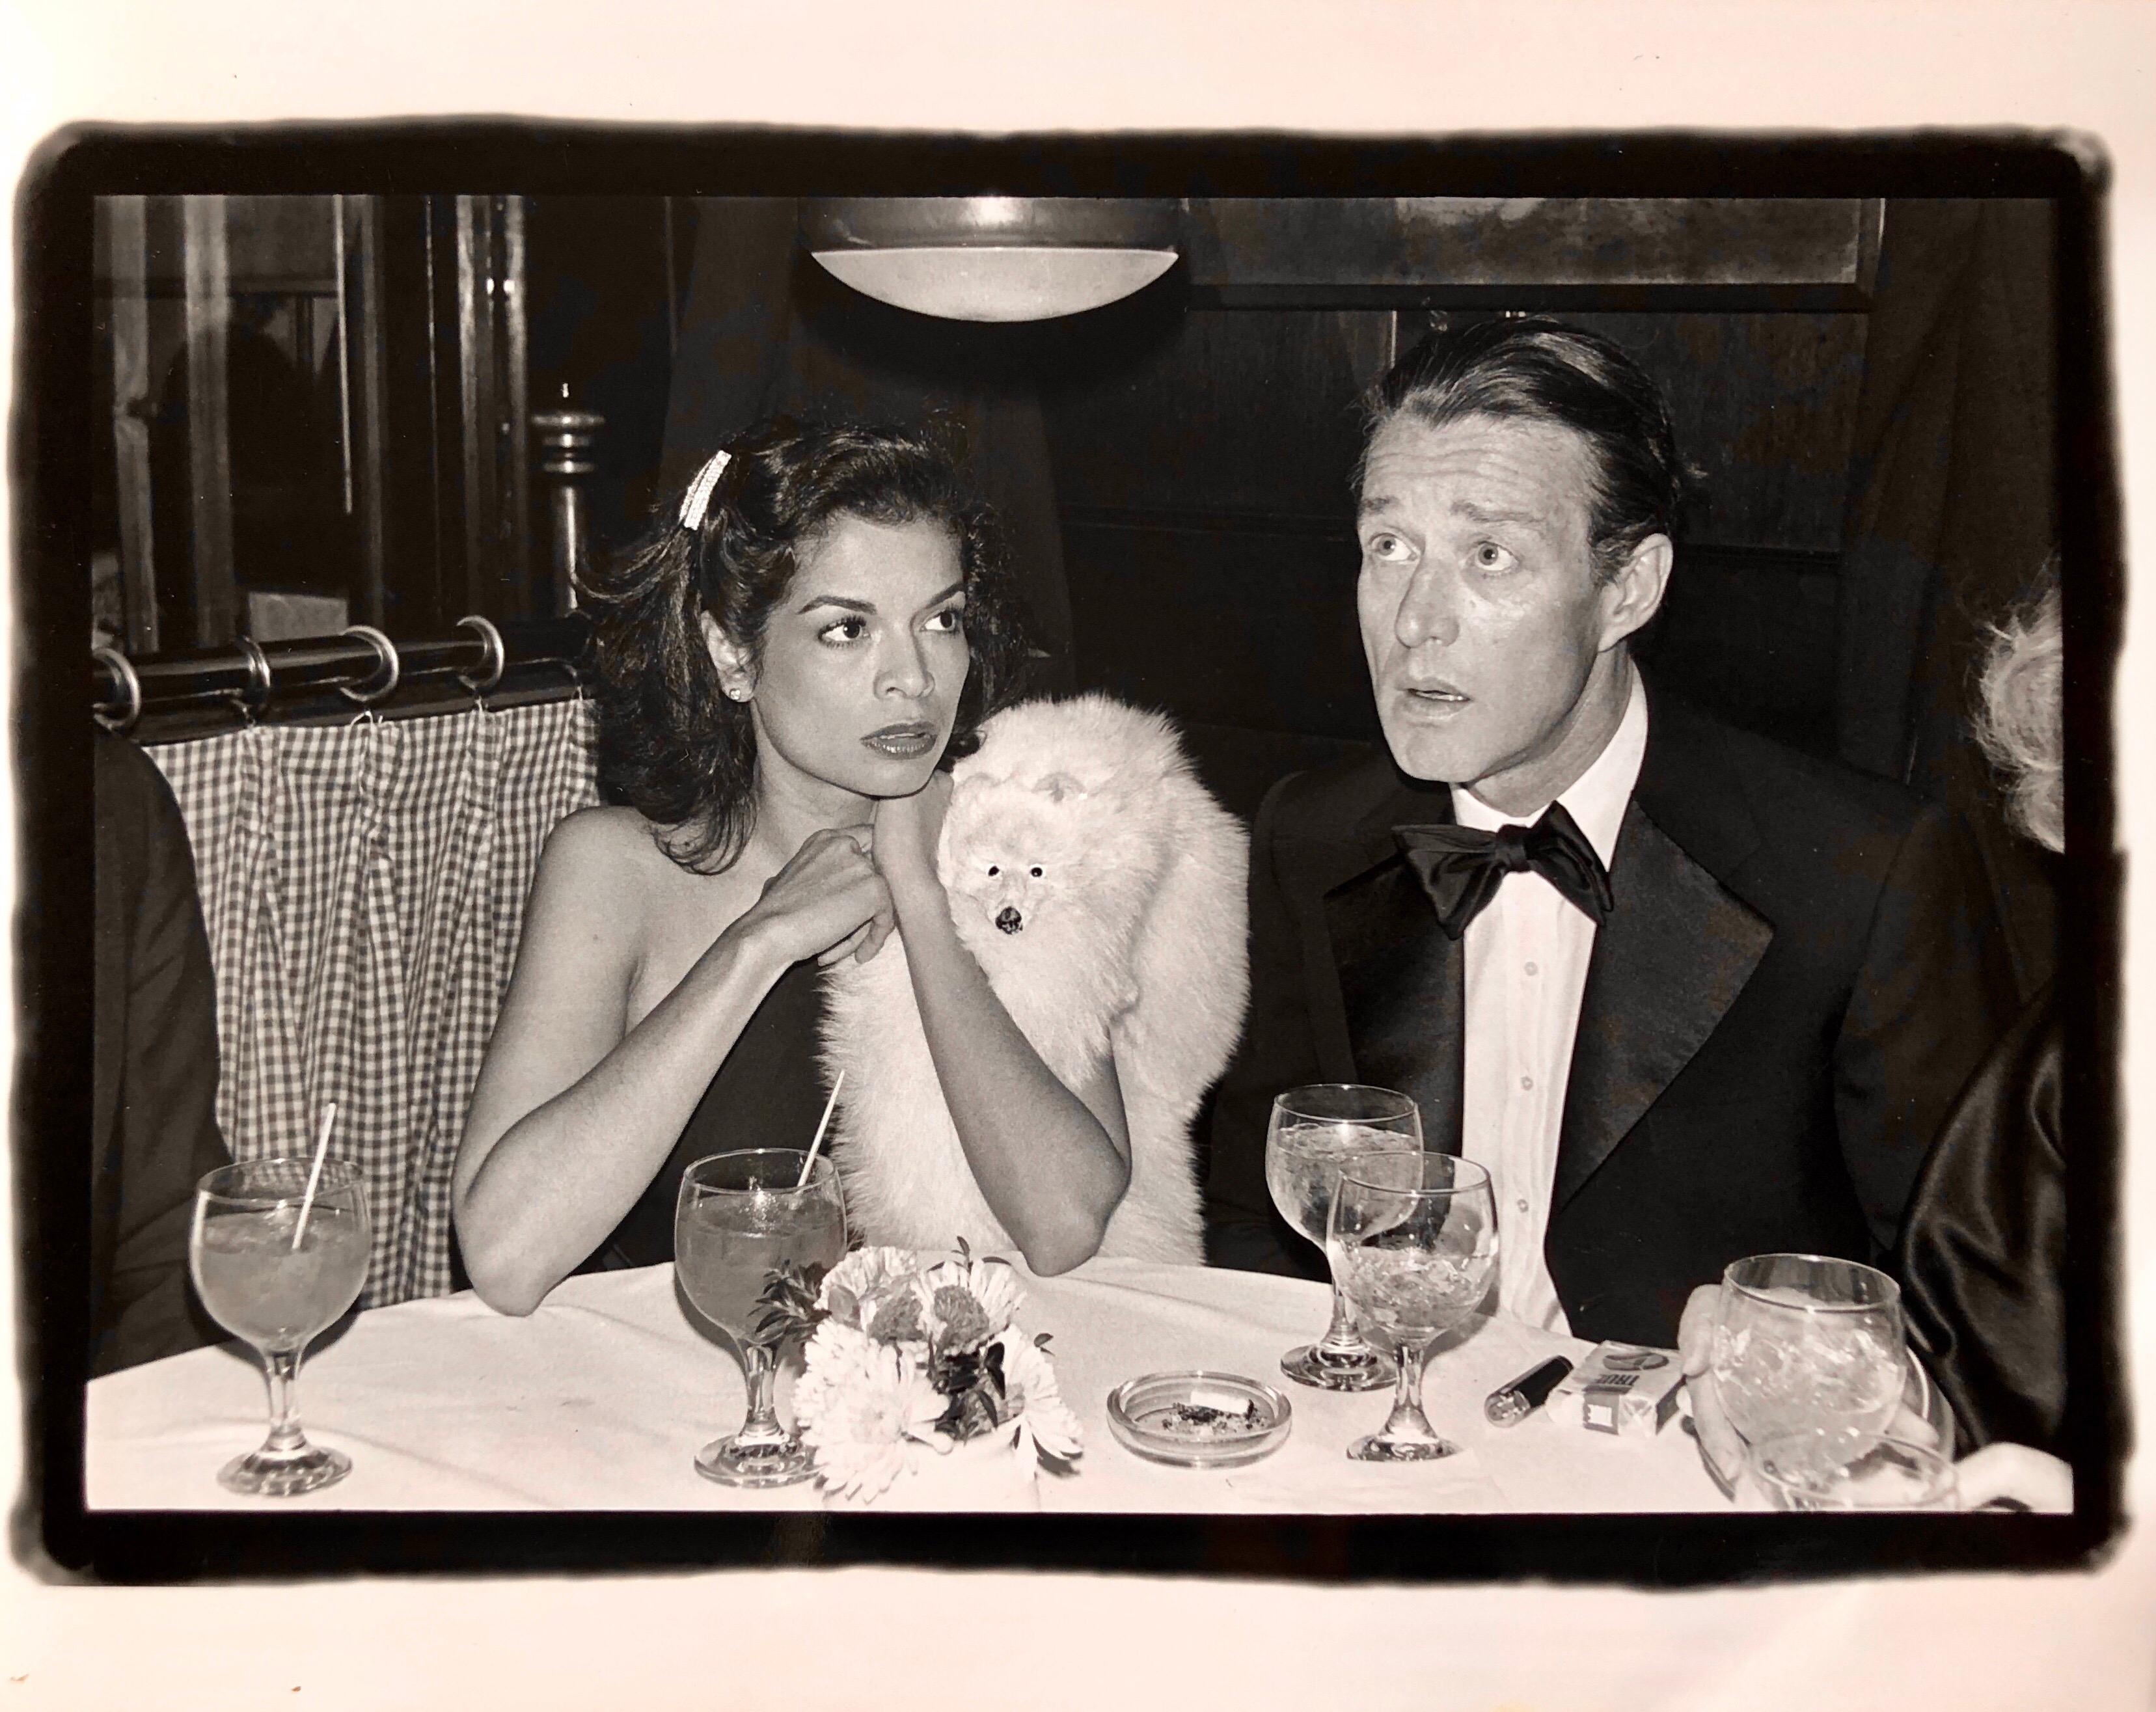 Fred McDarrah Black and White Photograph - Vintage Print Silver Gelatin Signed Photograph Bianca Jagger, Halston LIz Taylor